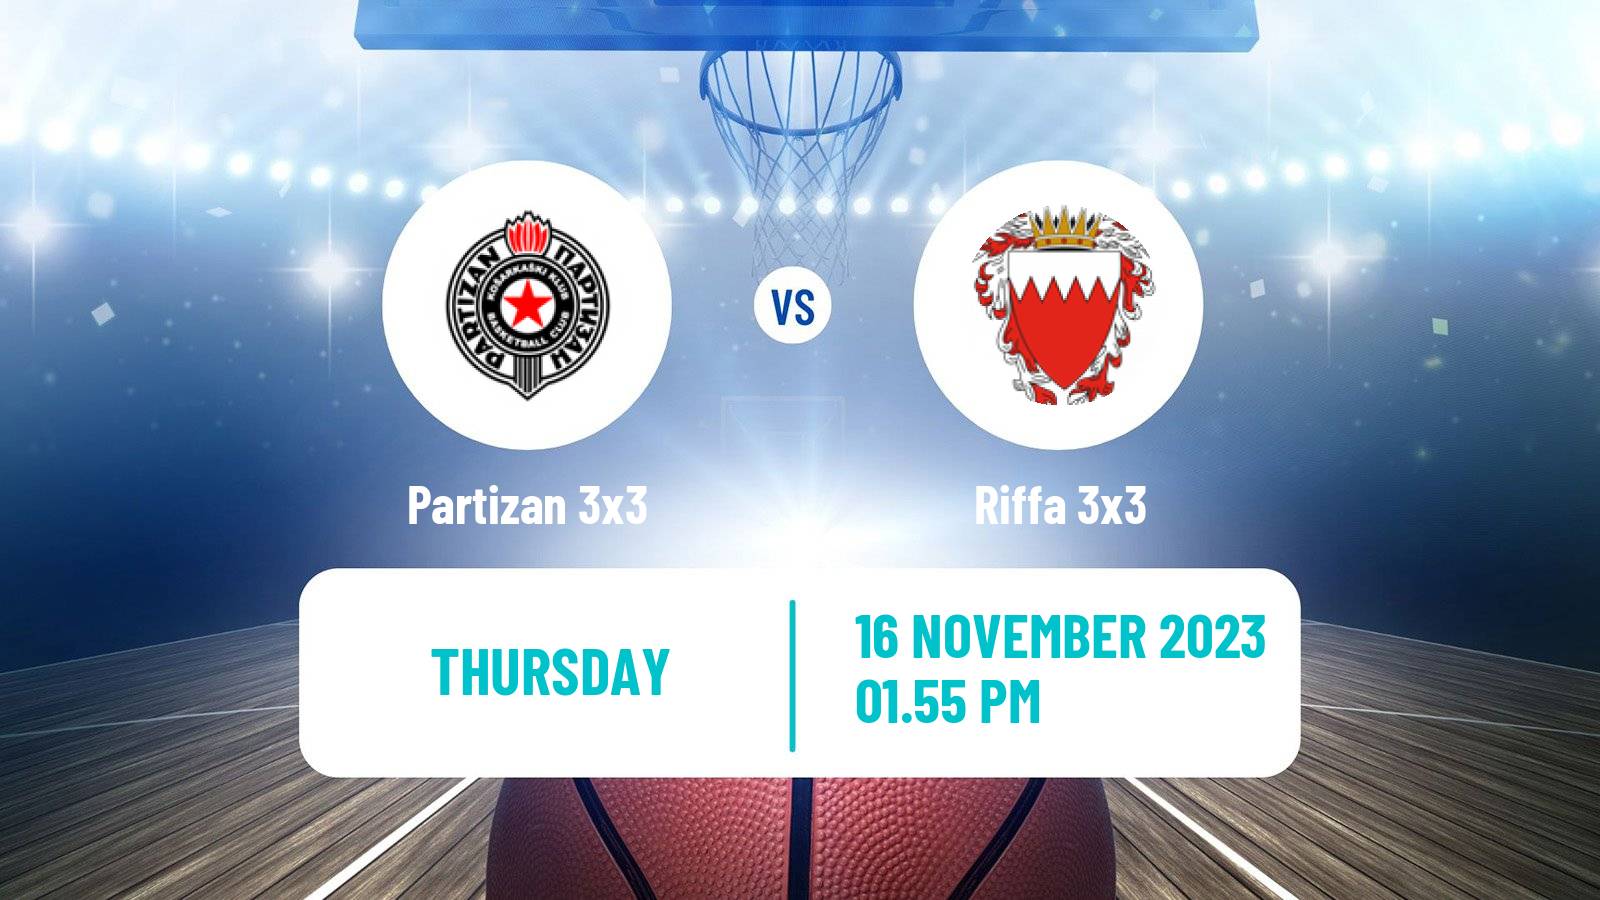 Basketball World Tour Manama 3x3 Partizan 3x3 - Riffa 3x3